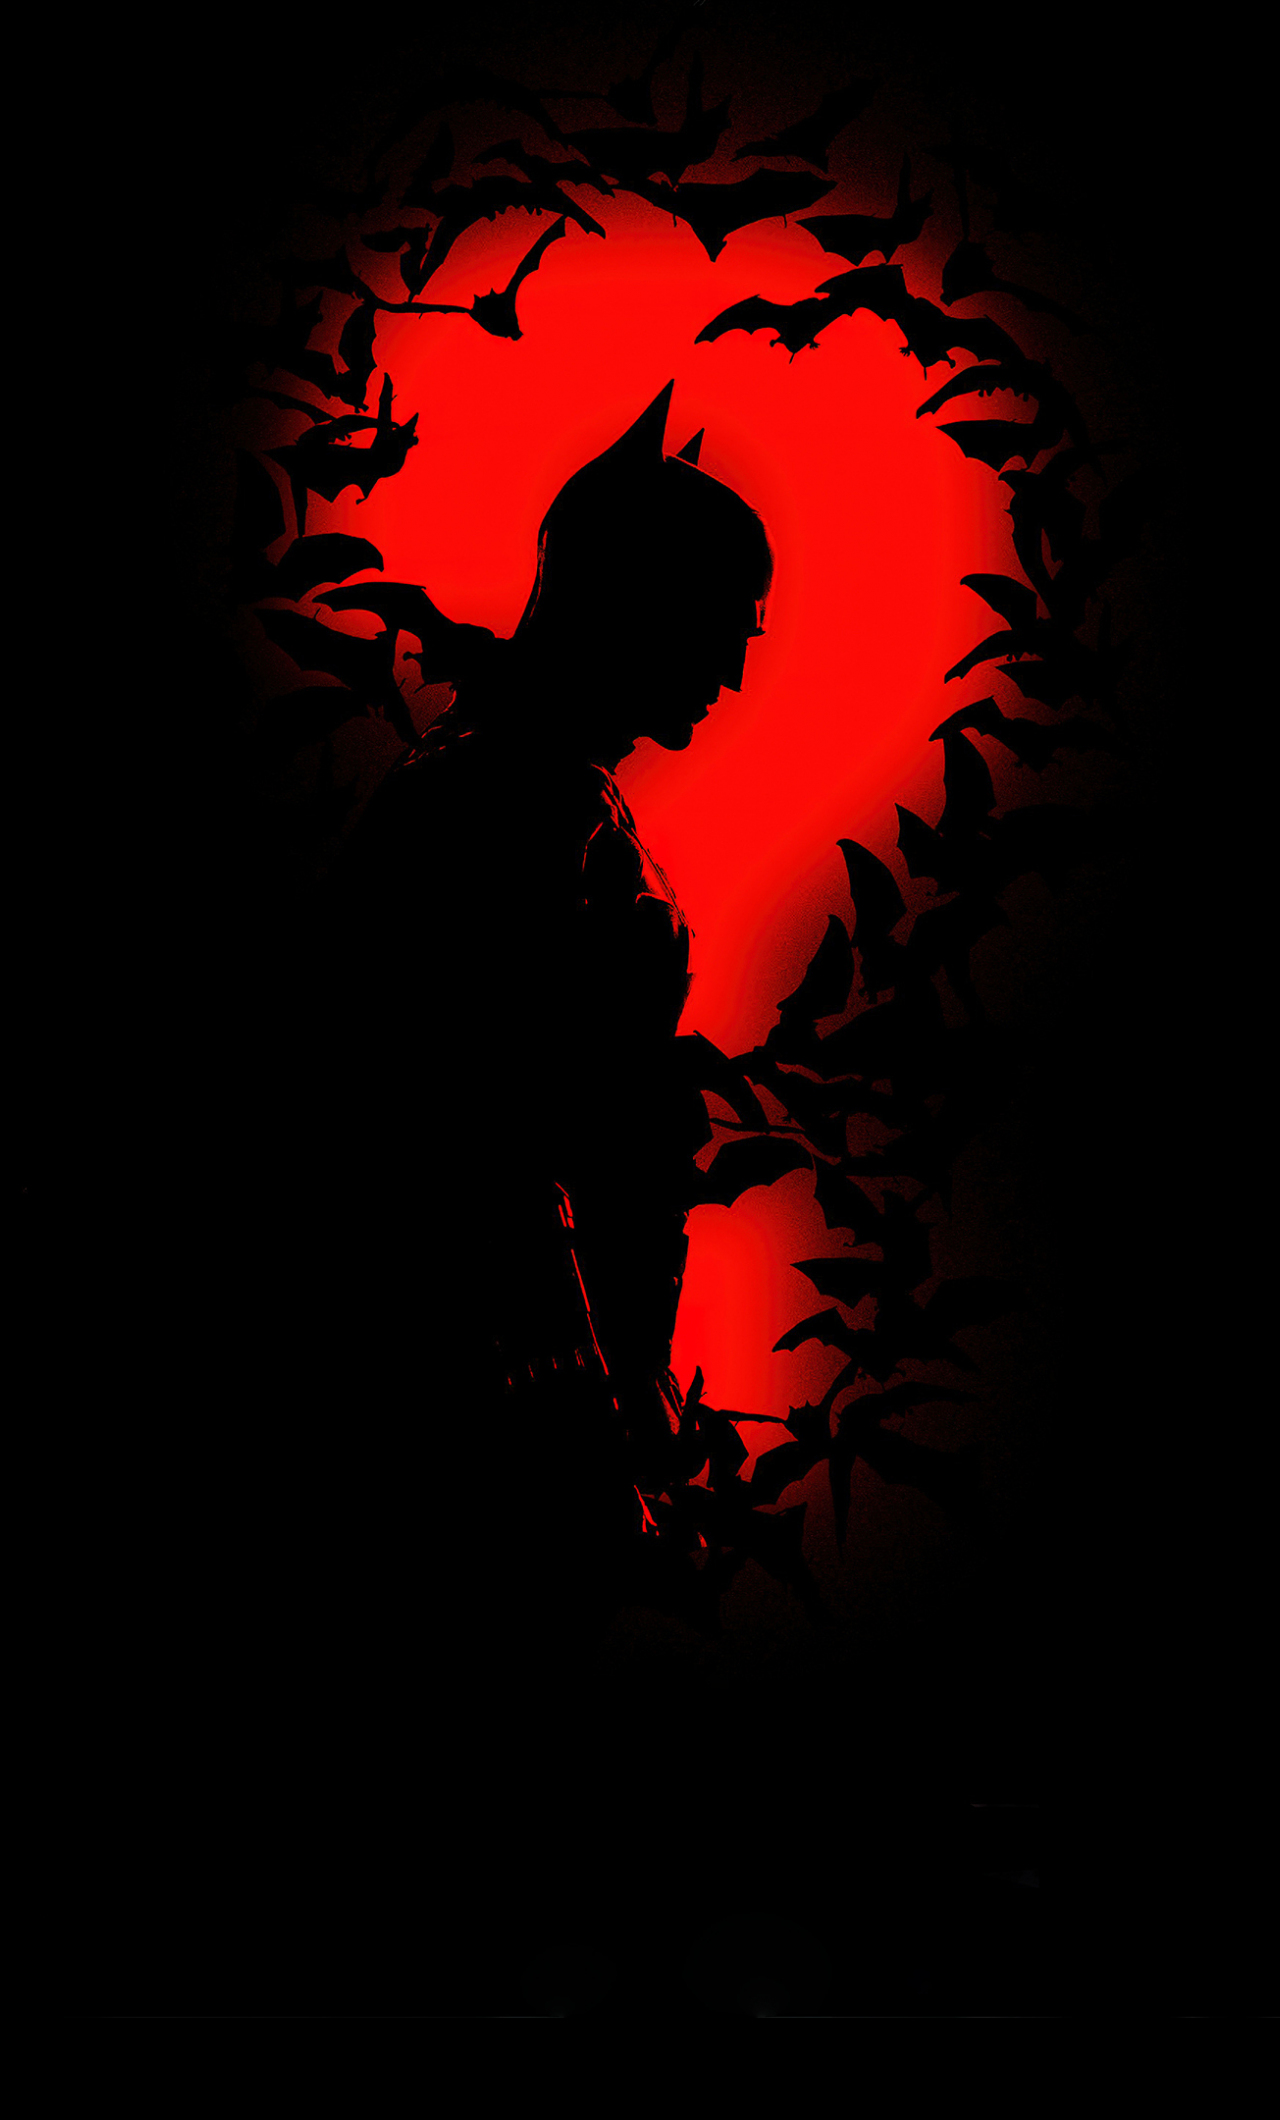 Download wallpaper x minimal poster dark the batman movie iphone plus x hd background